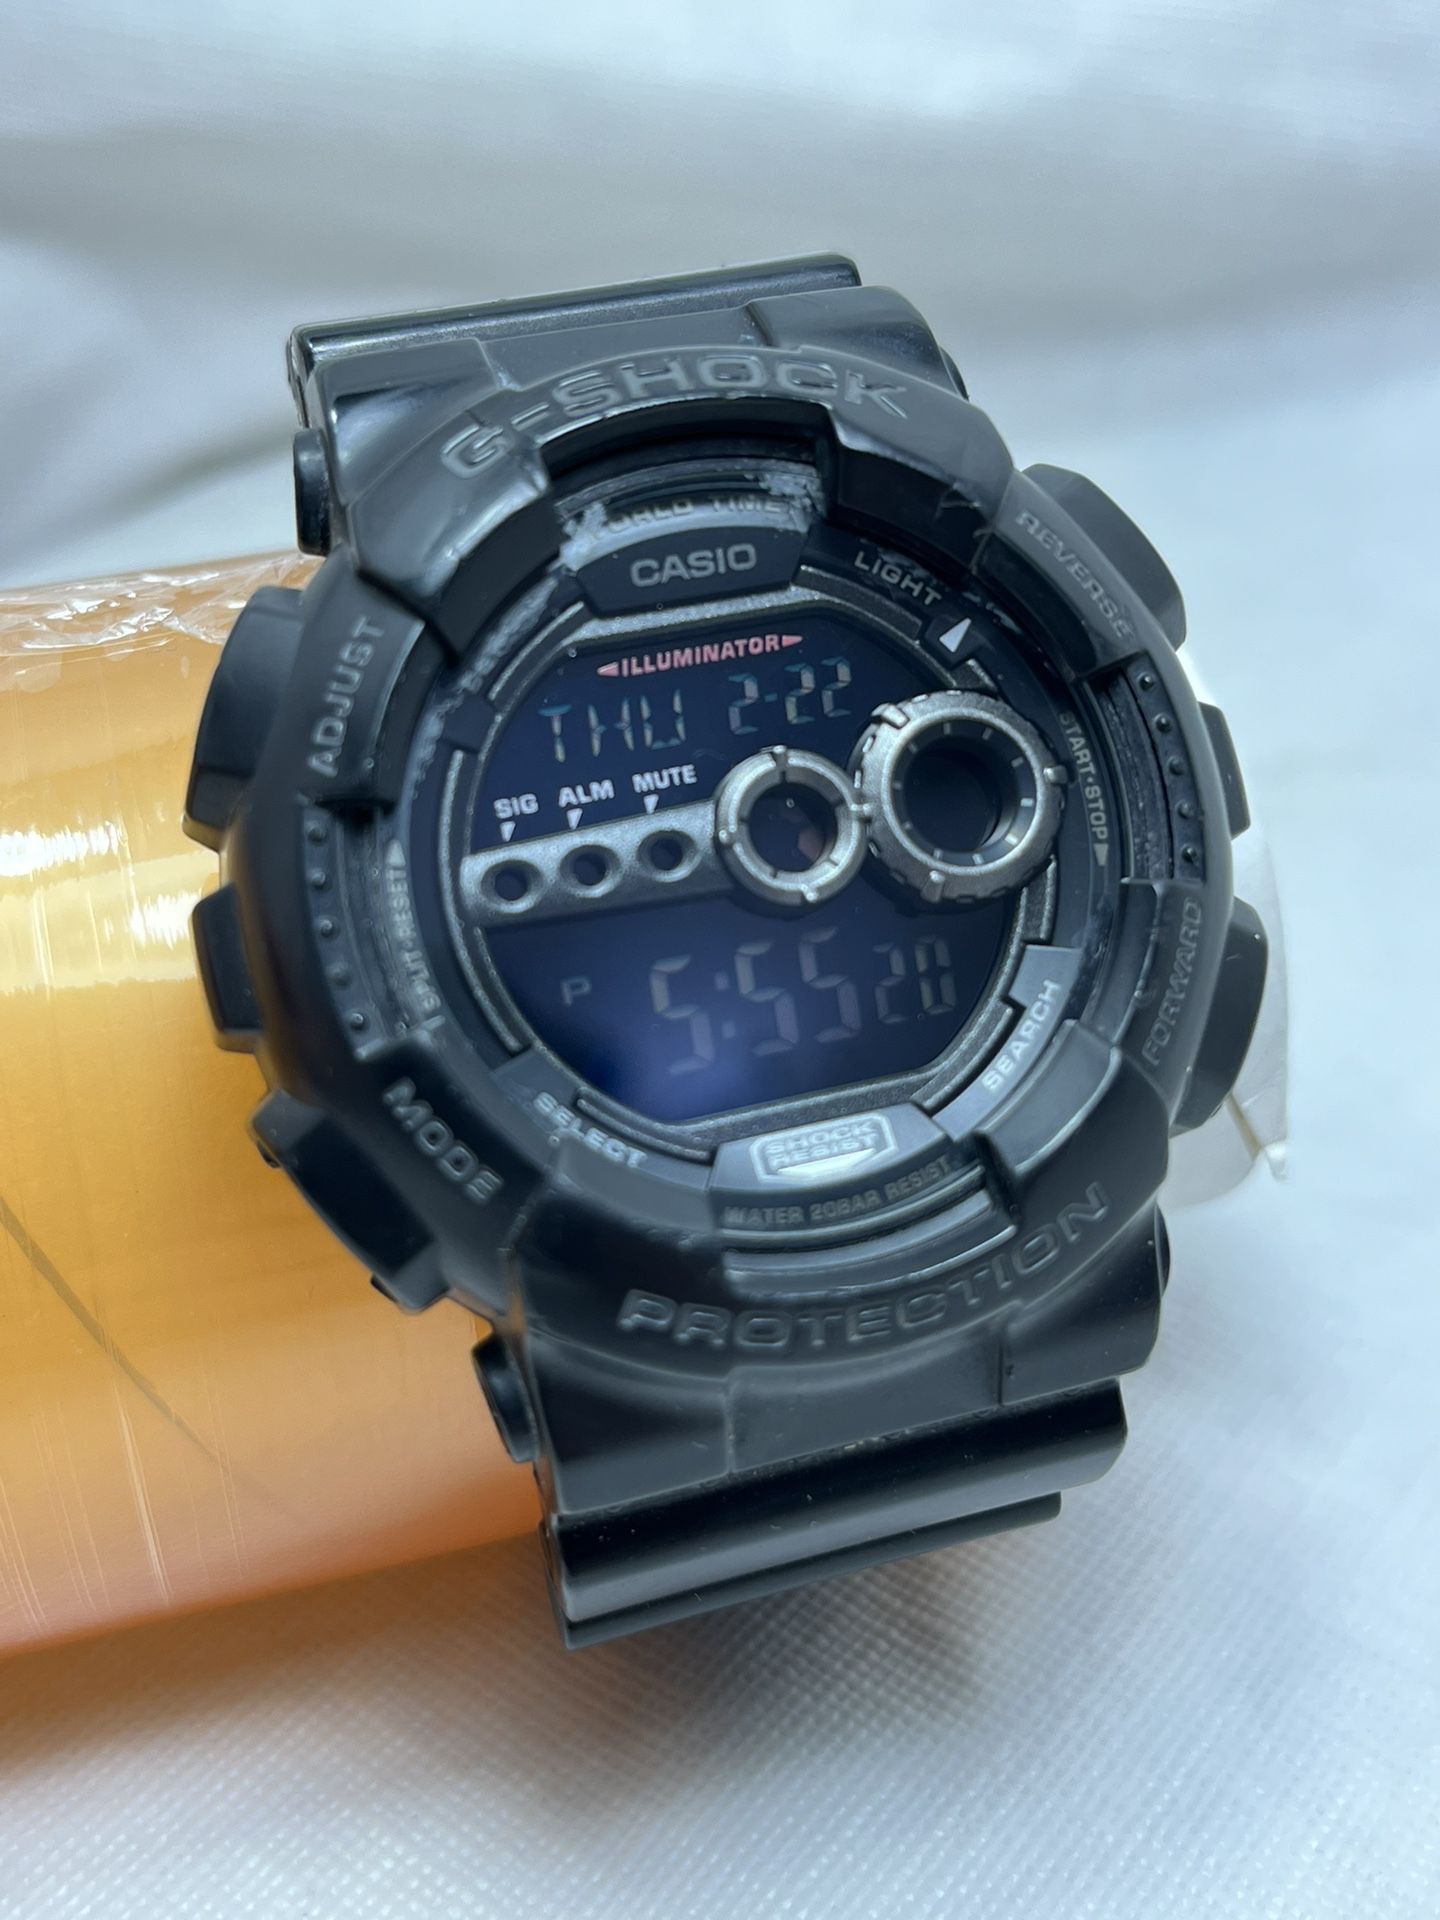 Casio G-Shock GD-100 3263 Sports Digital Wristwatch Water Resistant Black Light Up Alarm 20 Bar Shock Resist Absorbing Stainless Steel Time